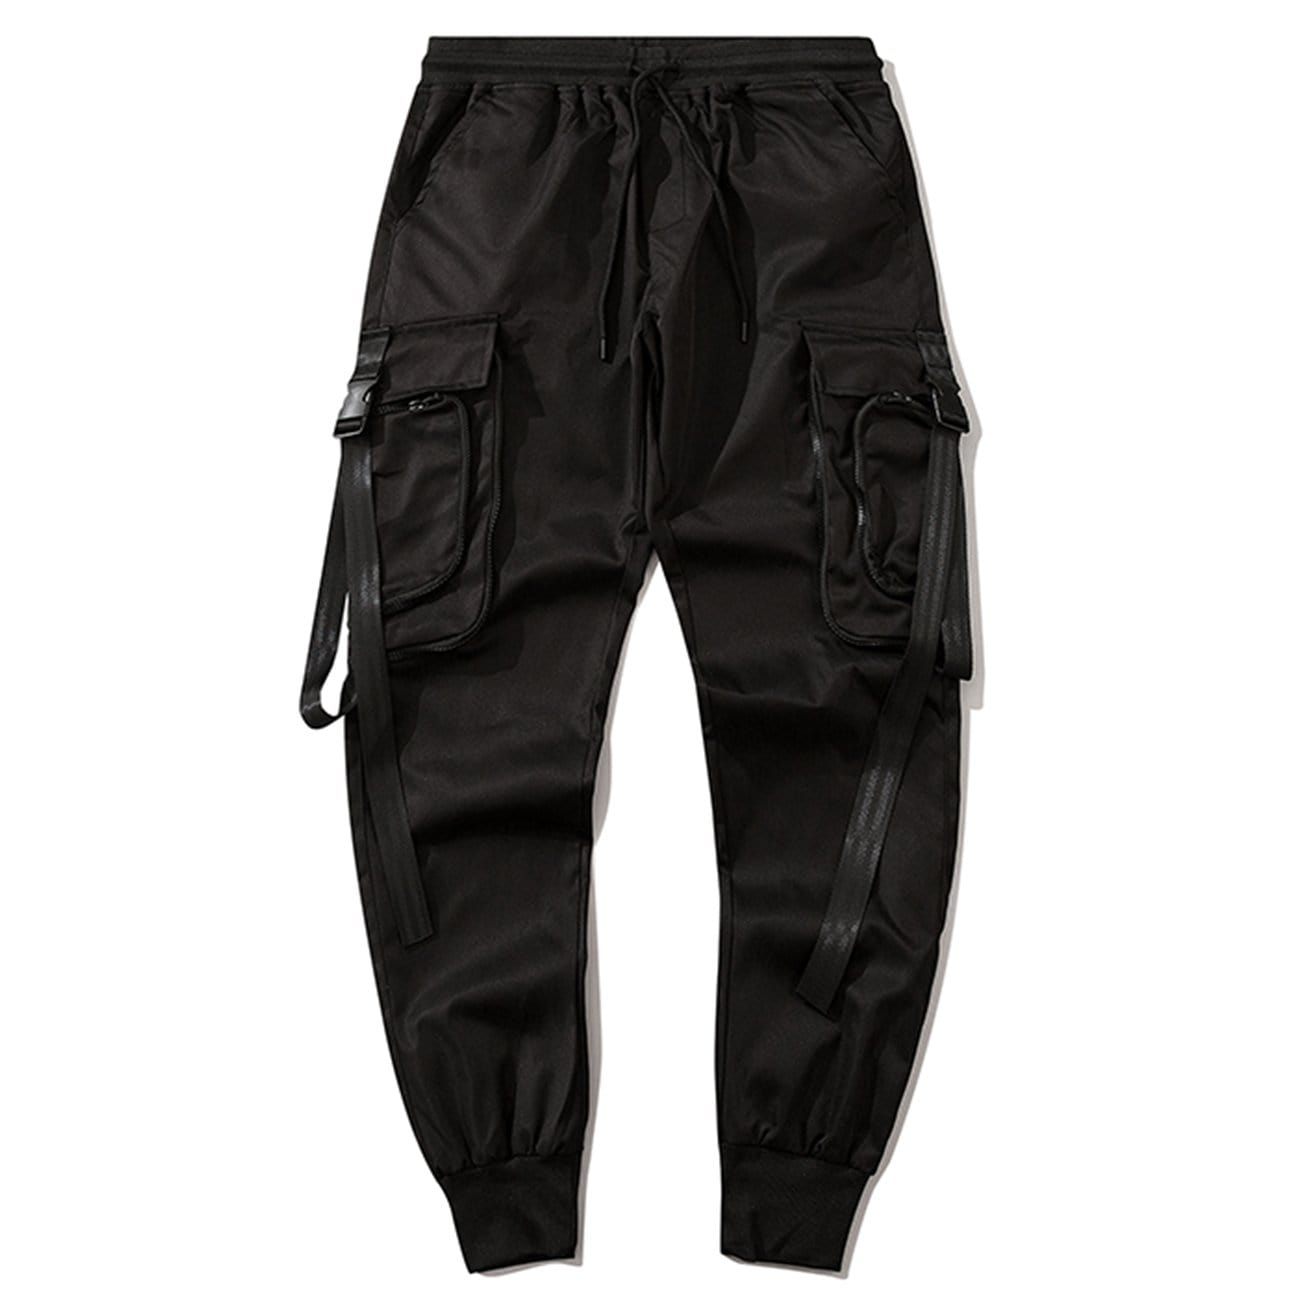 WLS Techwear Ribbons Zipper Pockets Cargo Pants